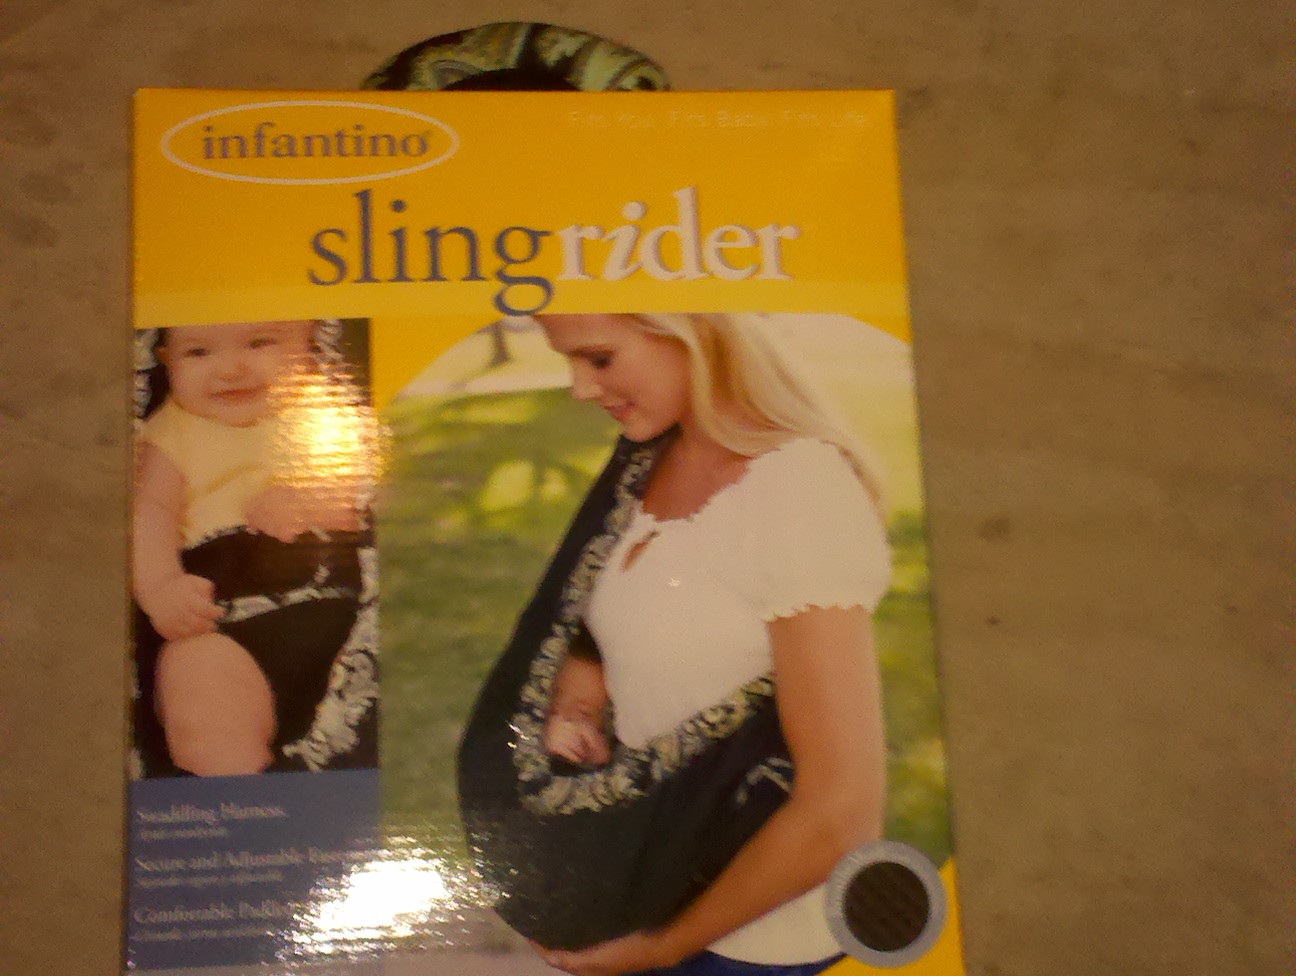 Infantino Baby Sling Rider